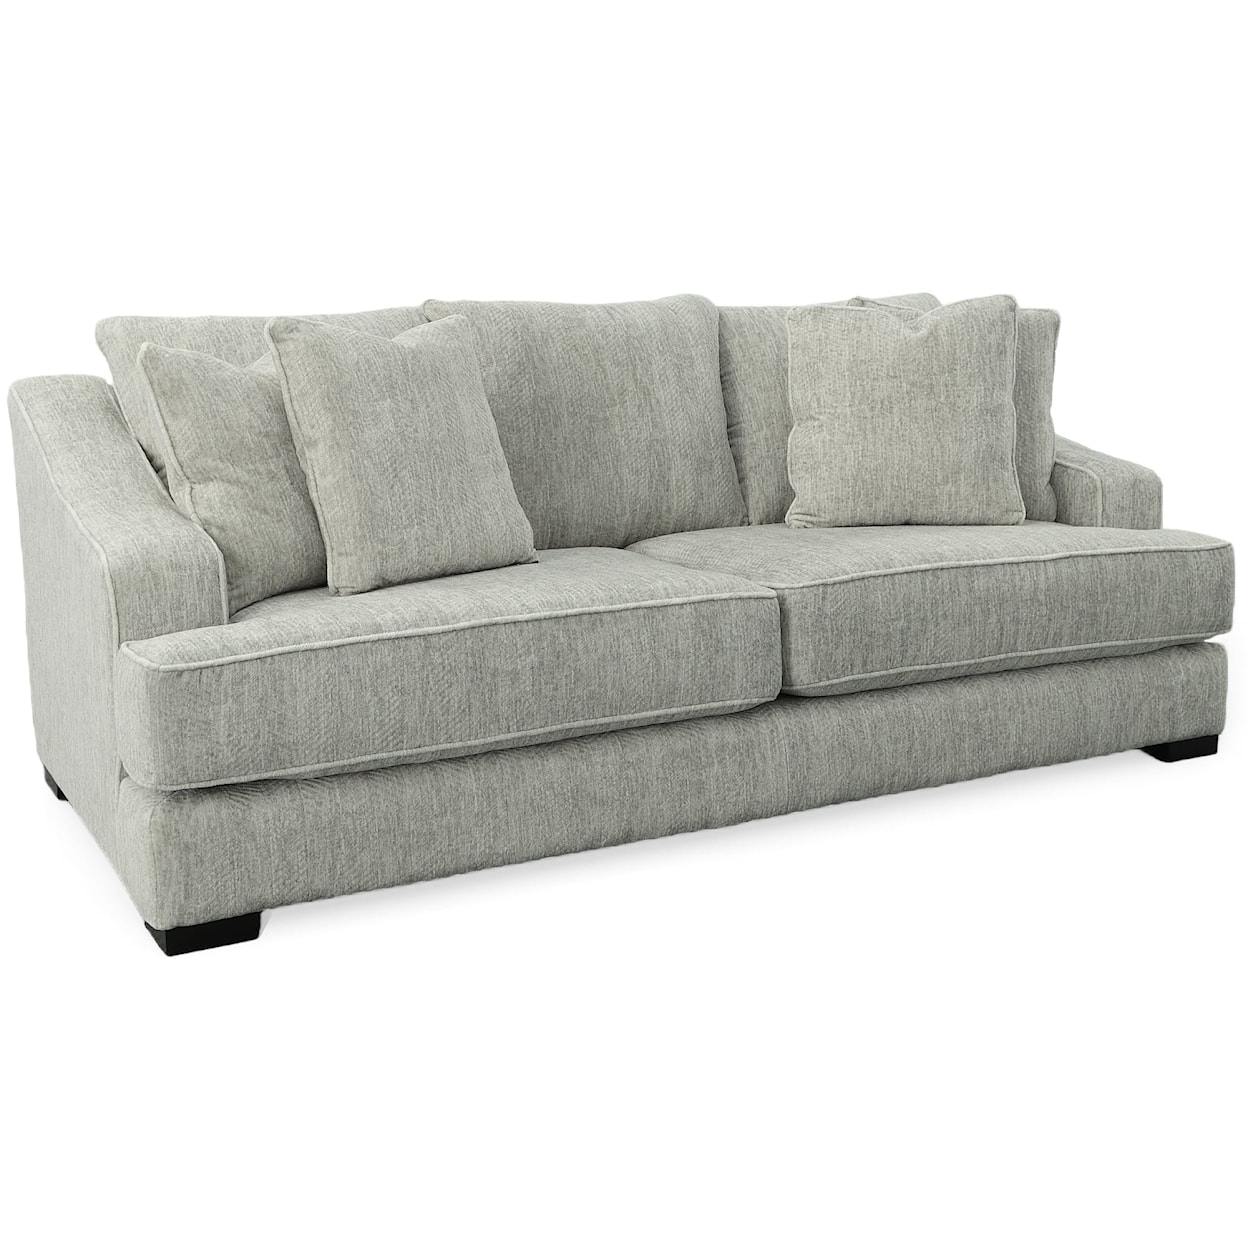 Stanton 376 Sofa